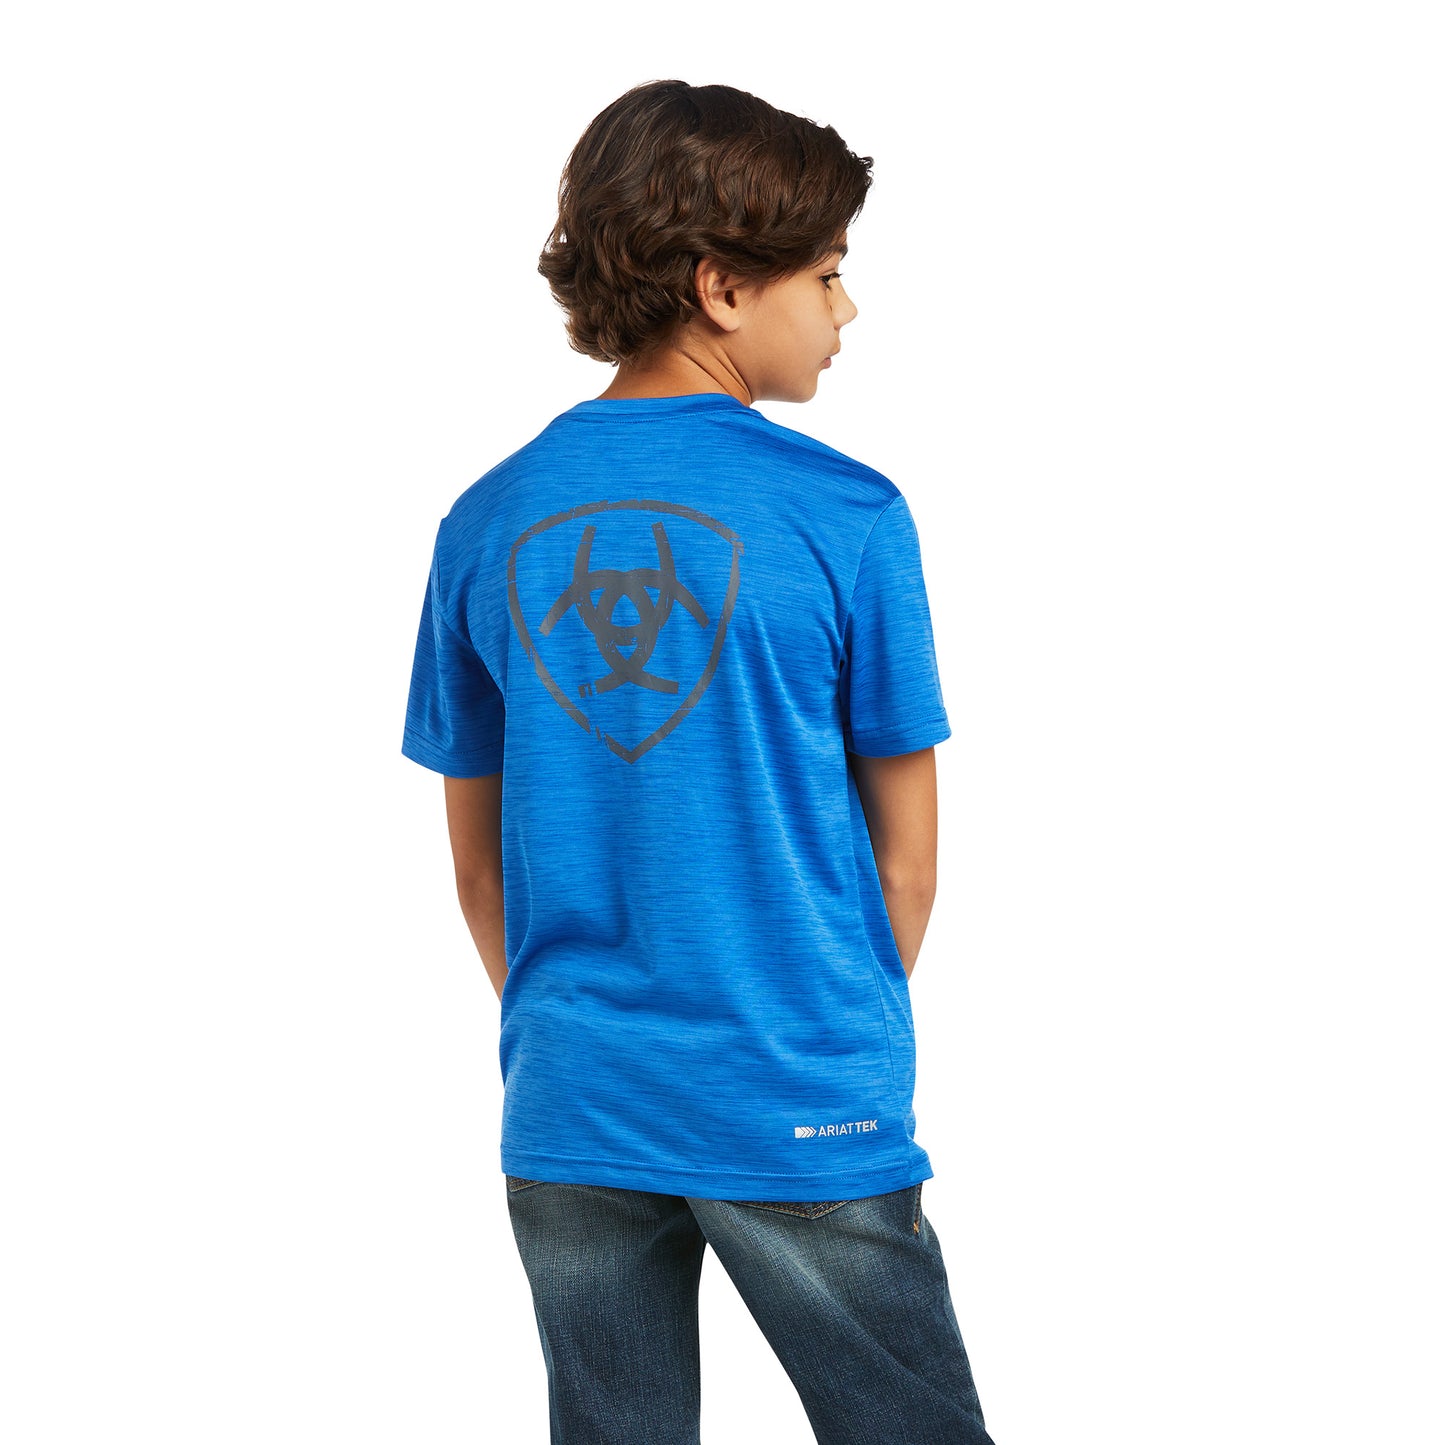 Champion Boys Short Sleeve Logo Tee Shirt, Bozzetto Blue Script, 4